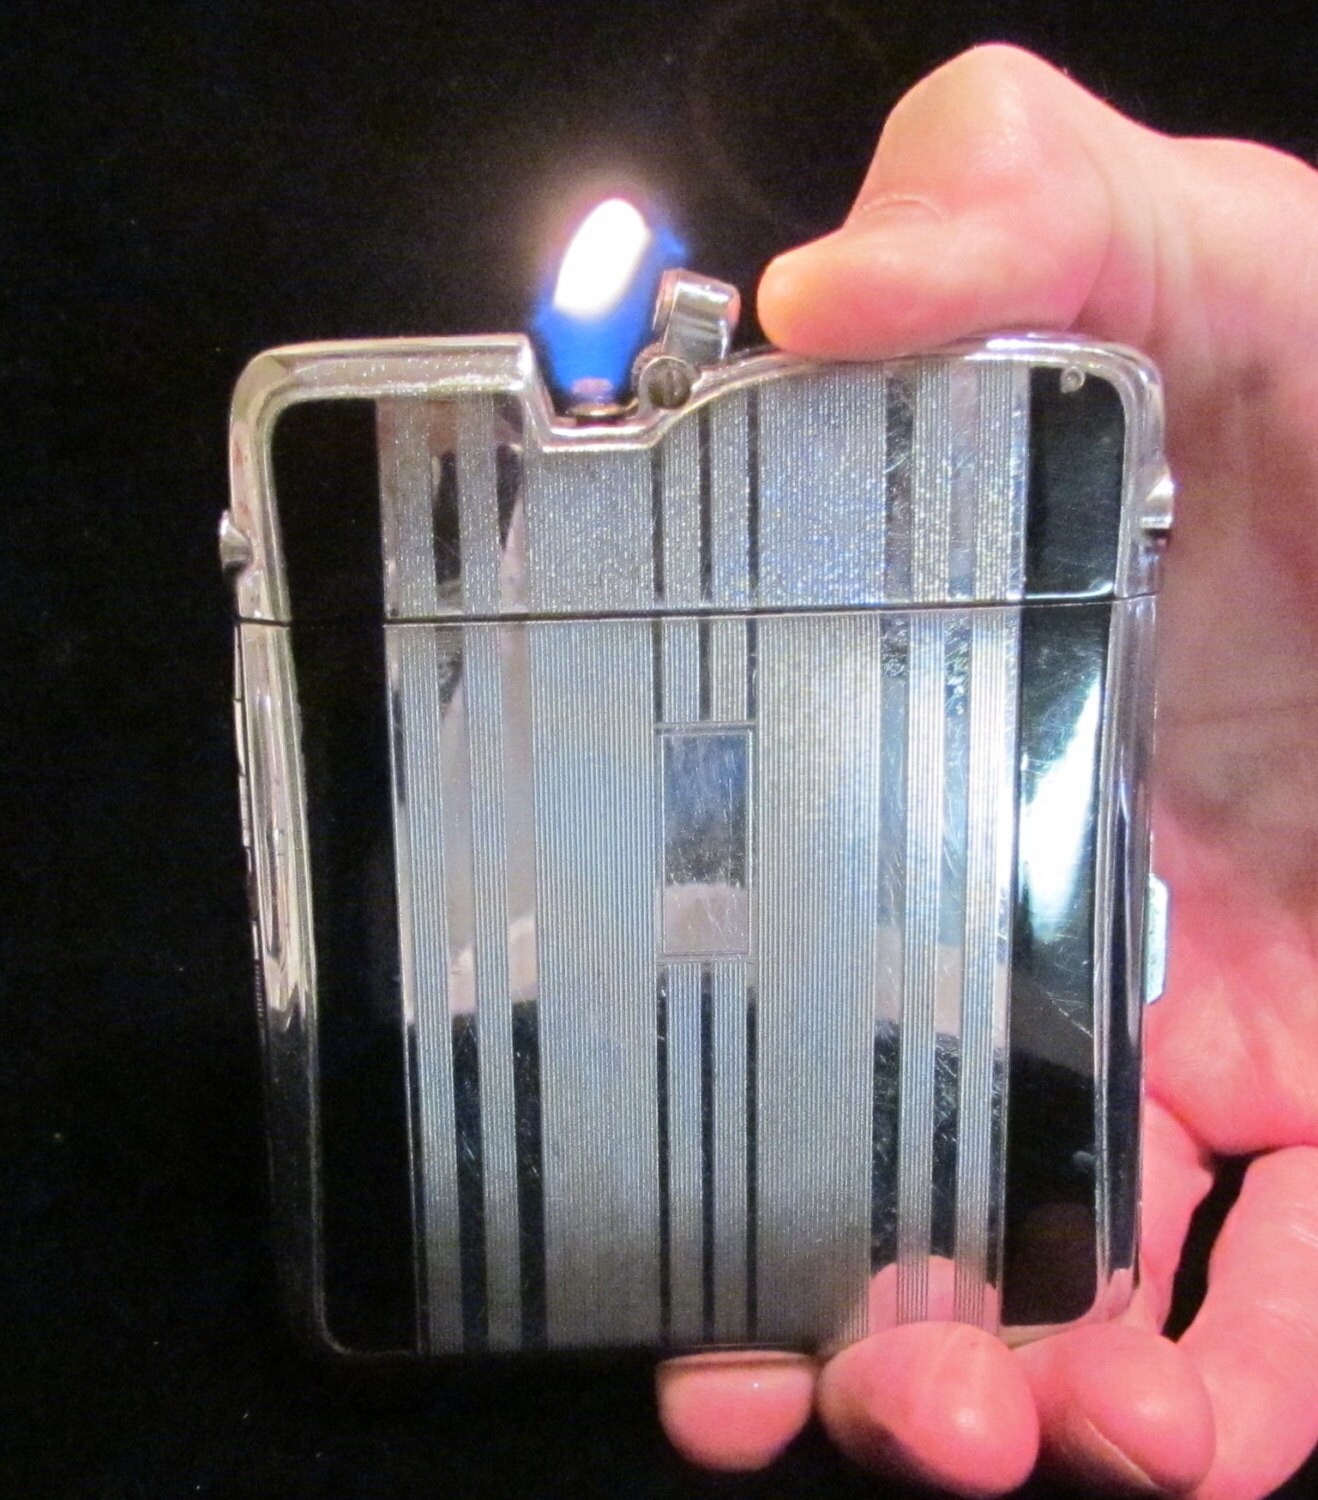 ronson lighter and cigarette case